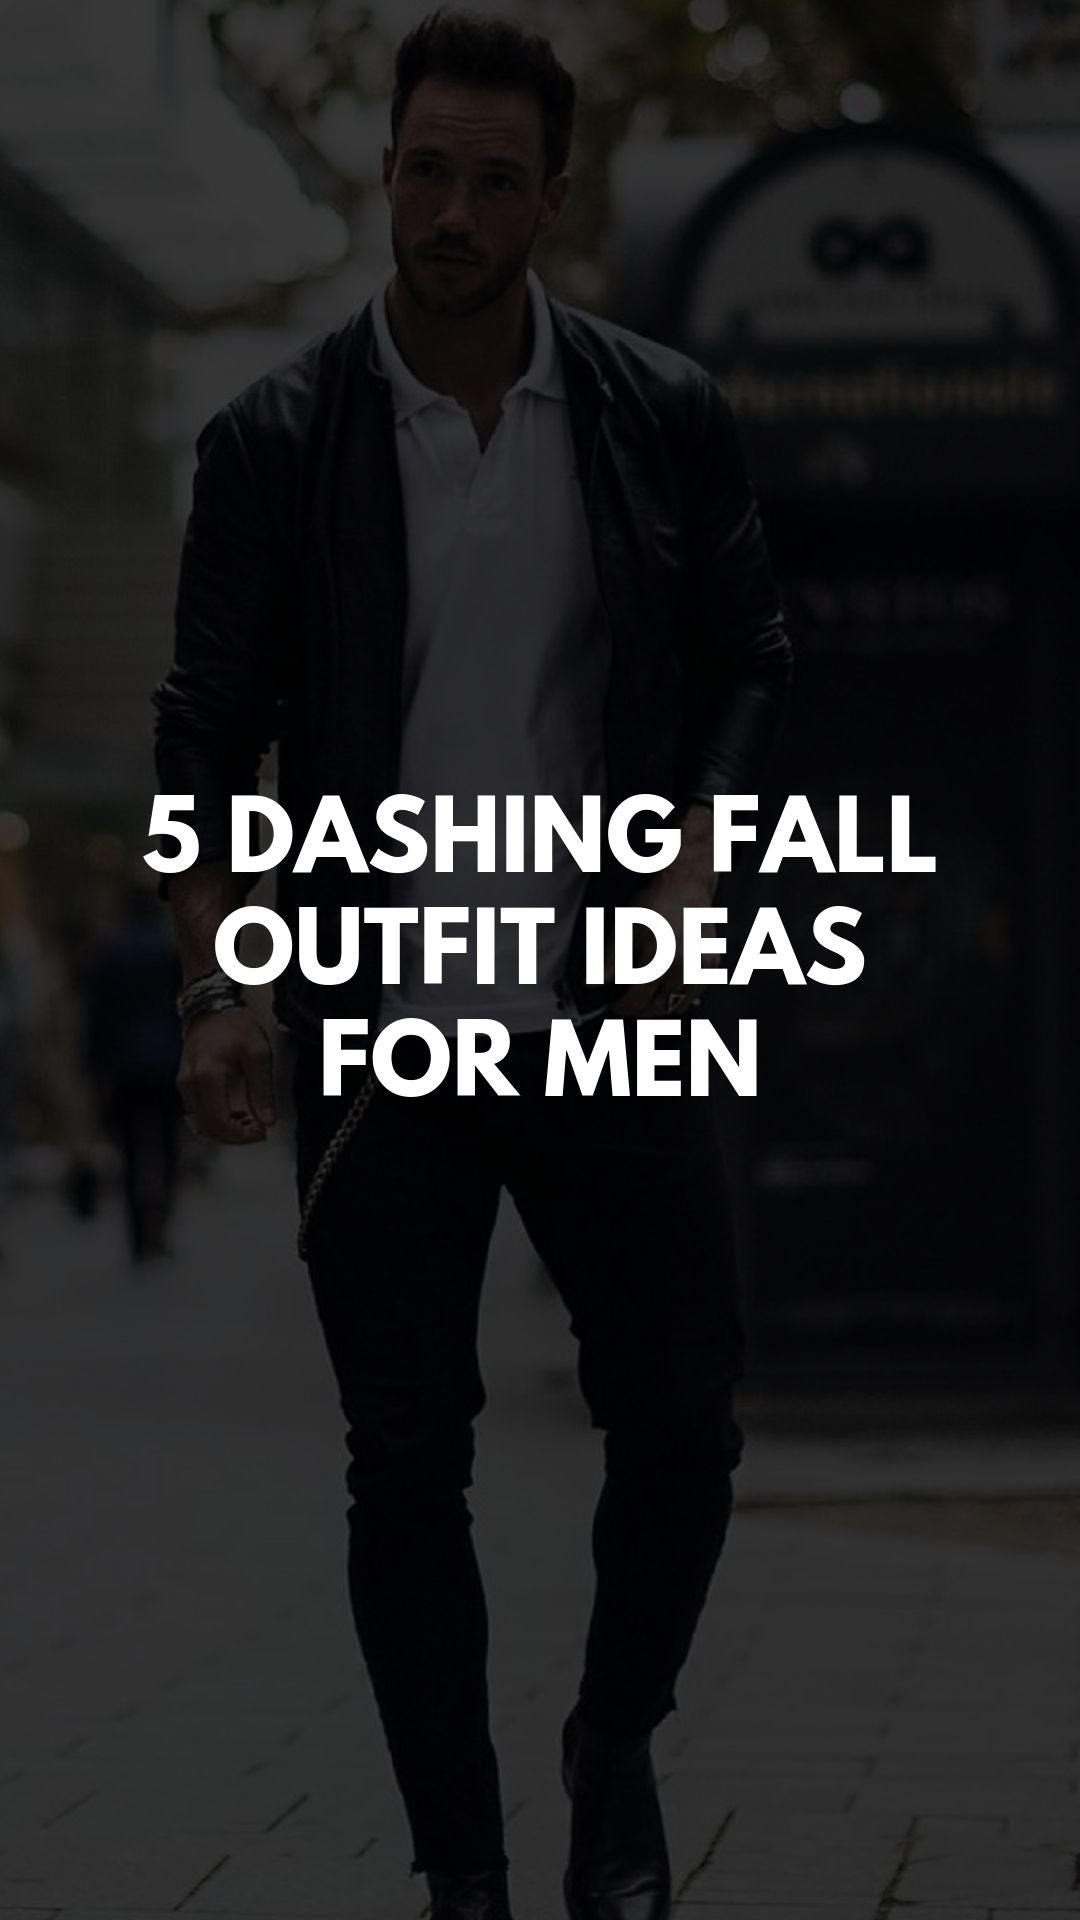 5 Dashing Fall Outfit Ideas For Men #falloutfits #mensfashion #fallstyle